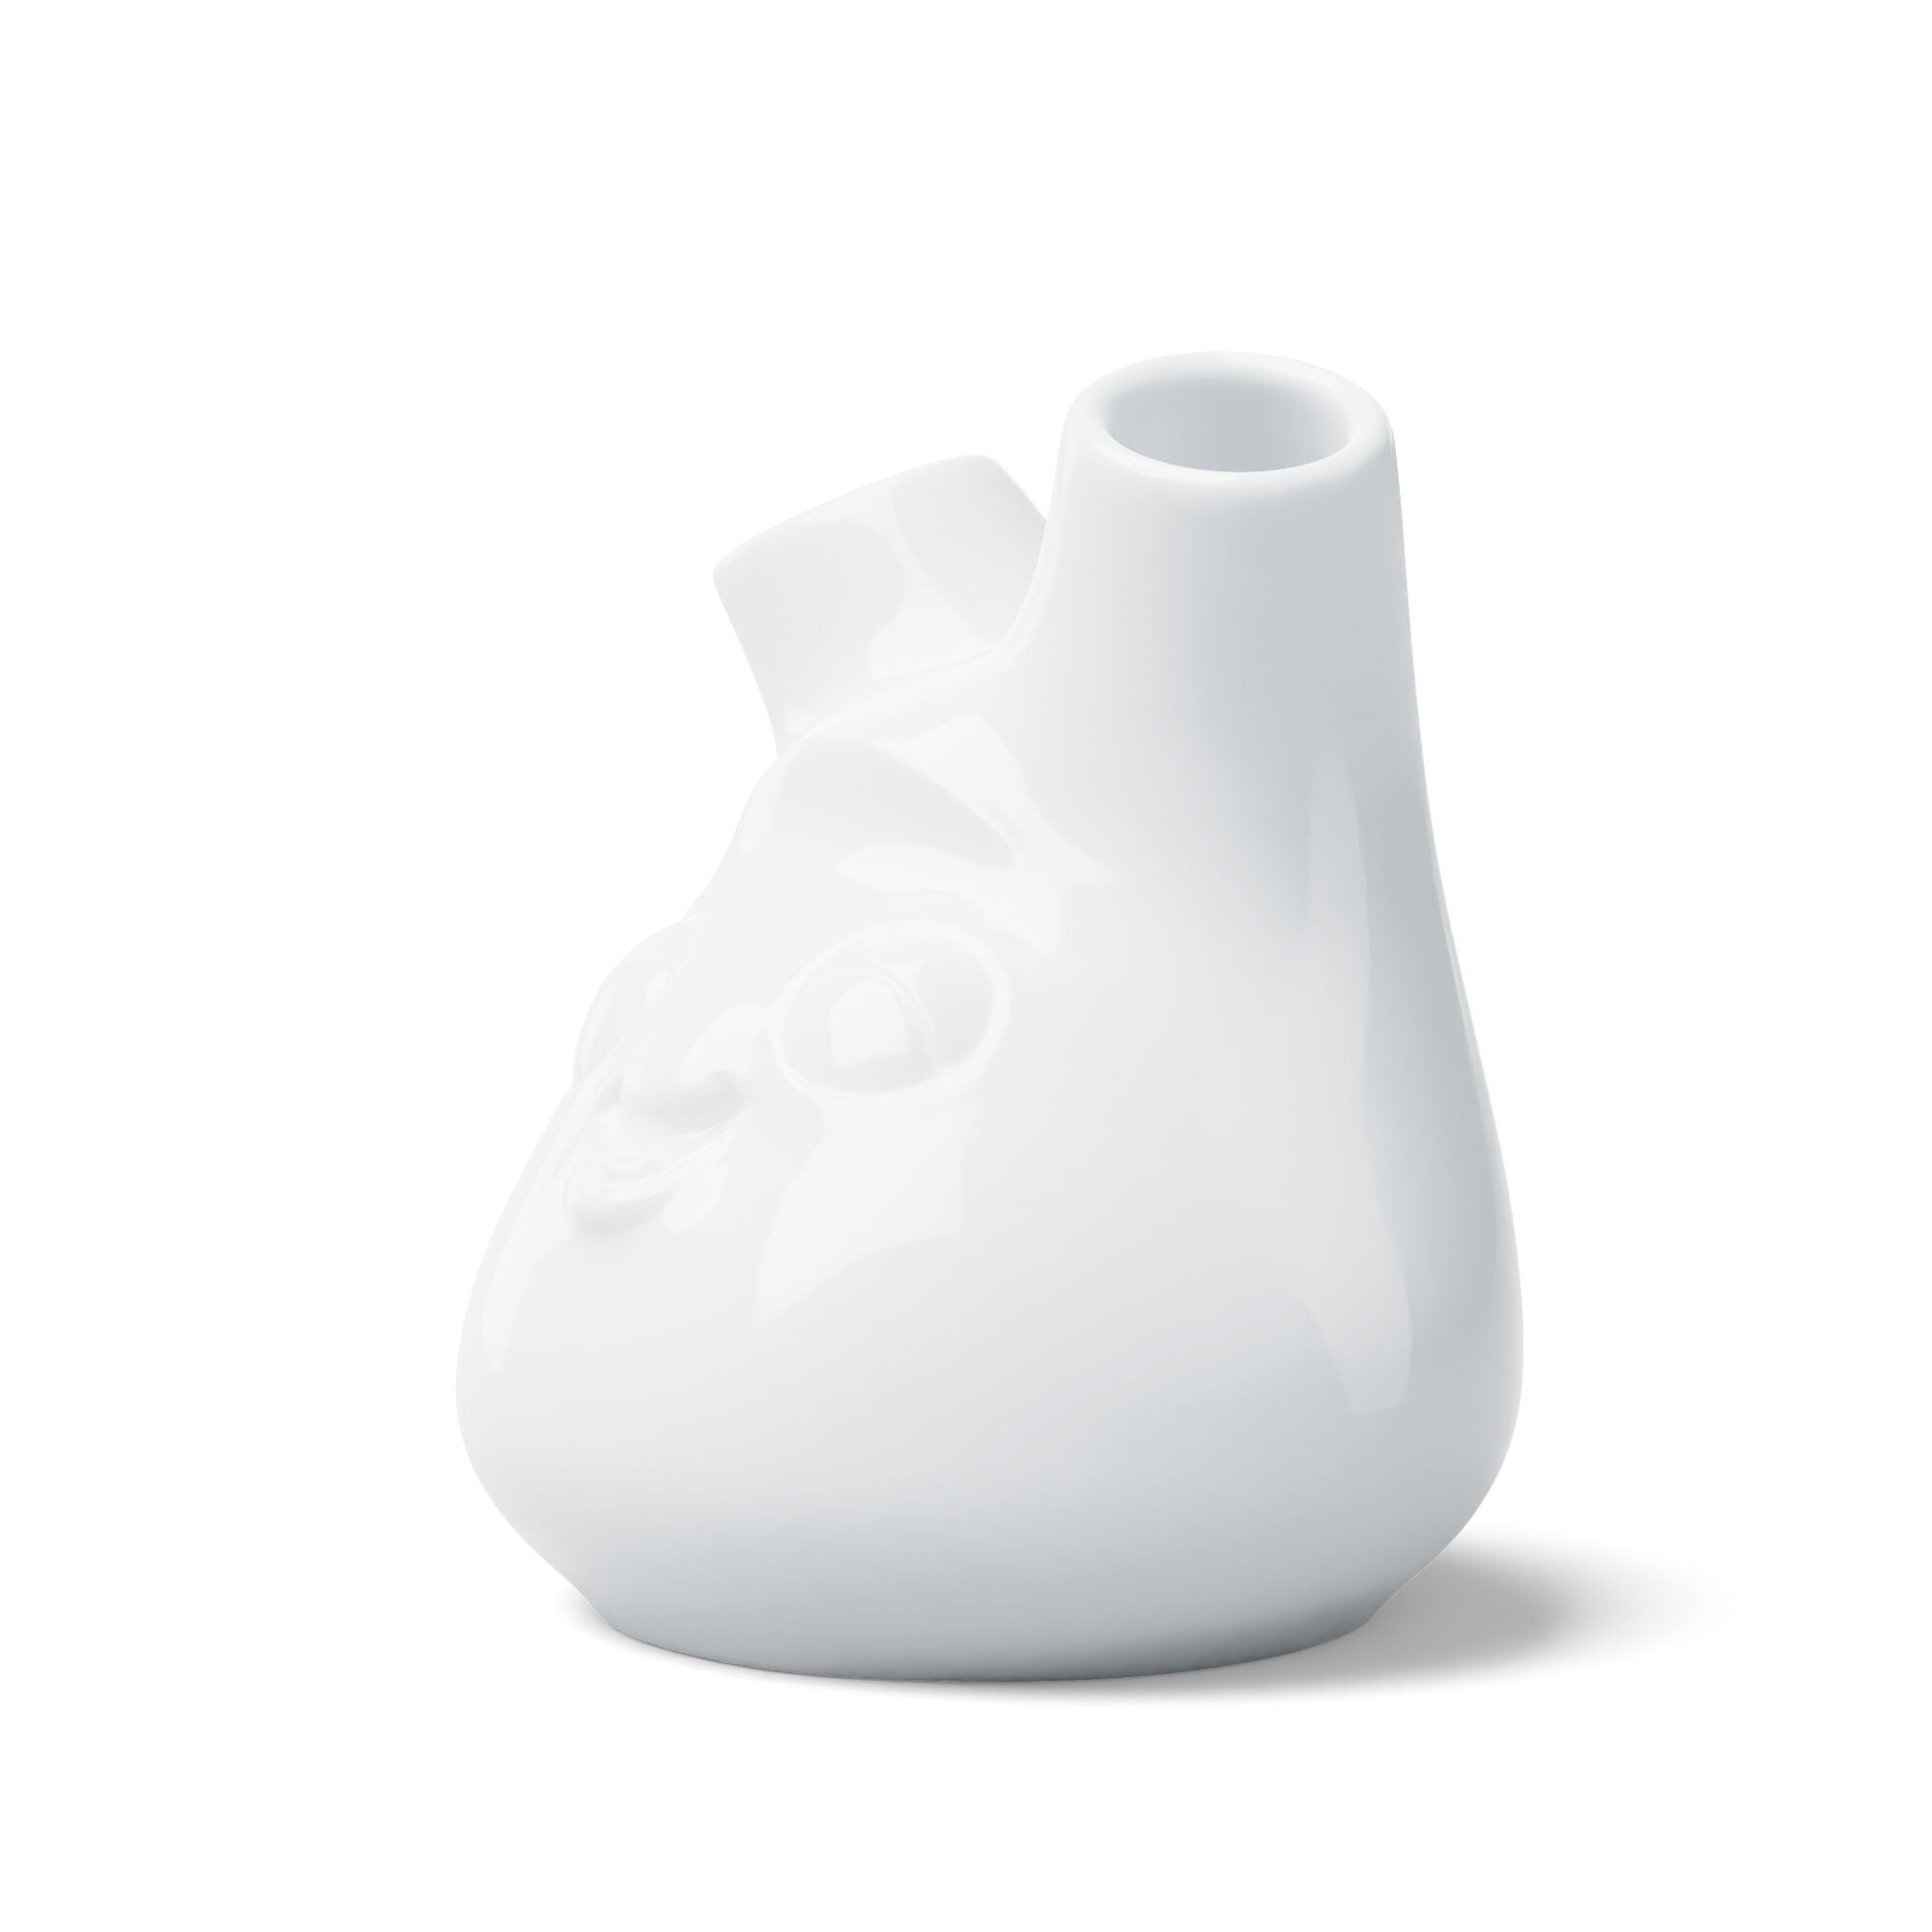 Vase small "Kess", white, 10cm - TV cups